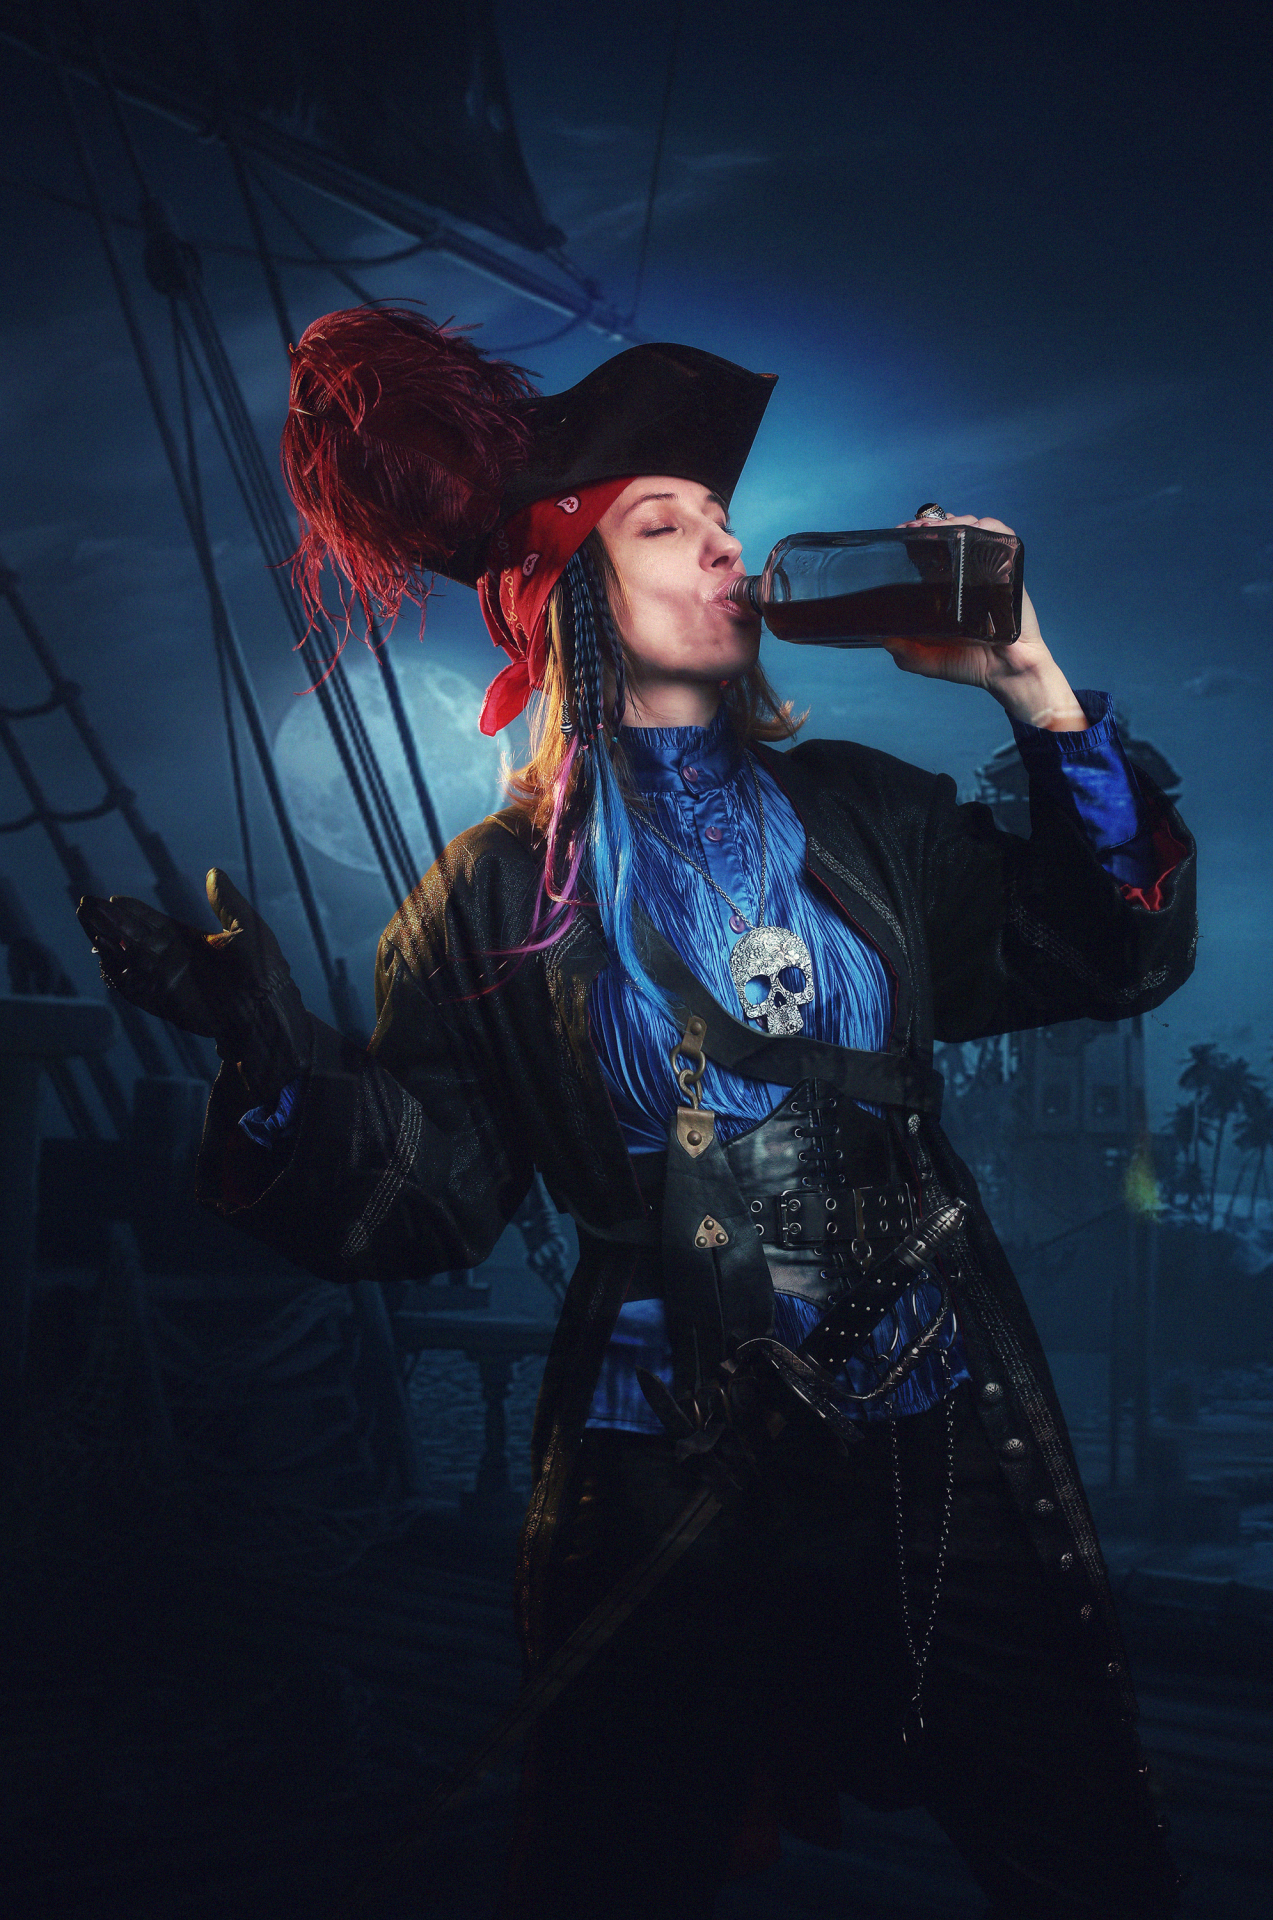 Pirate, Rum, Ship, Night, Pirates